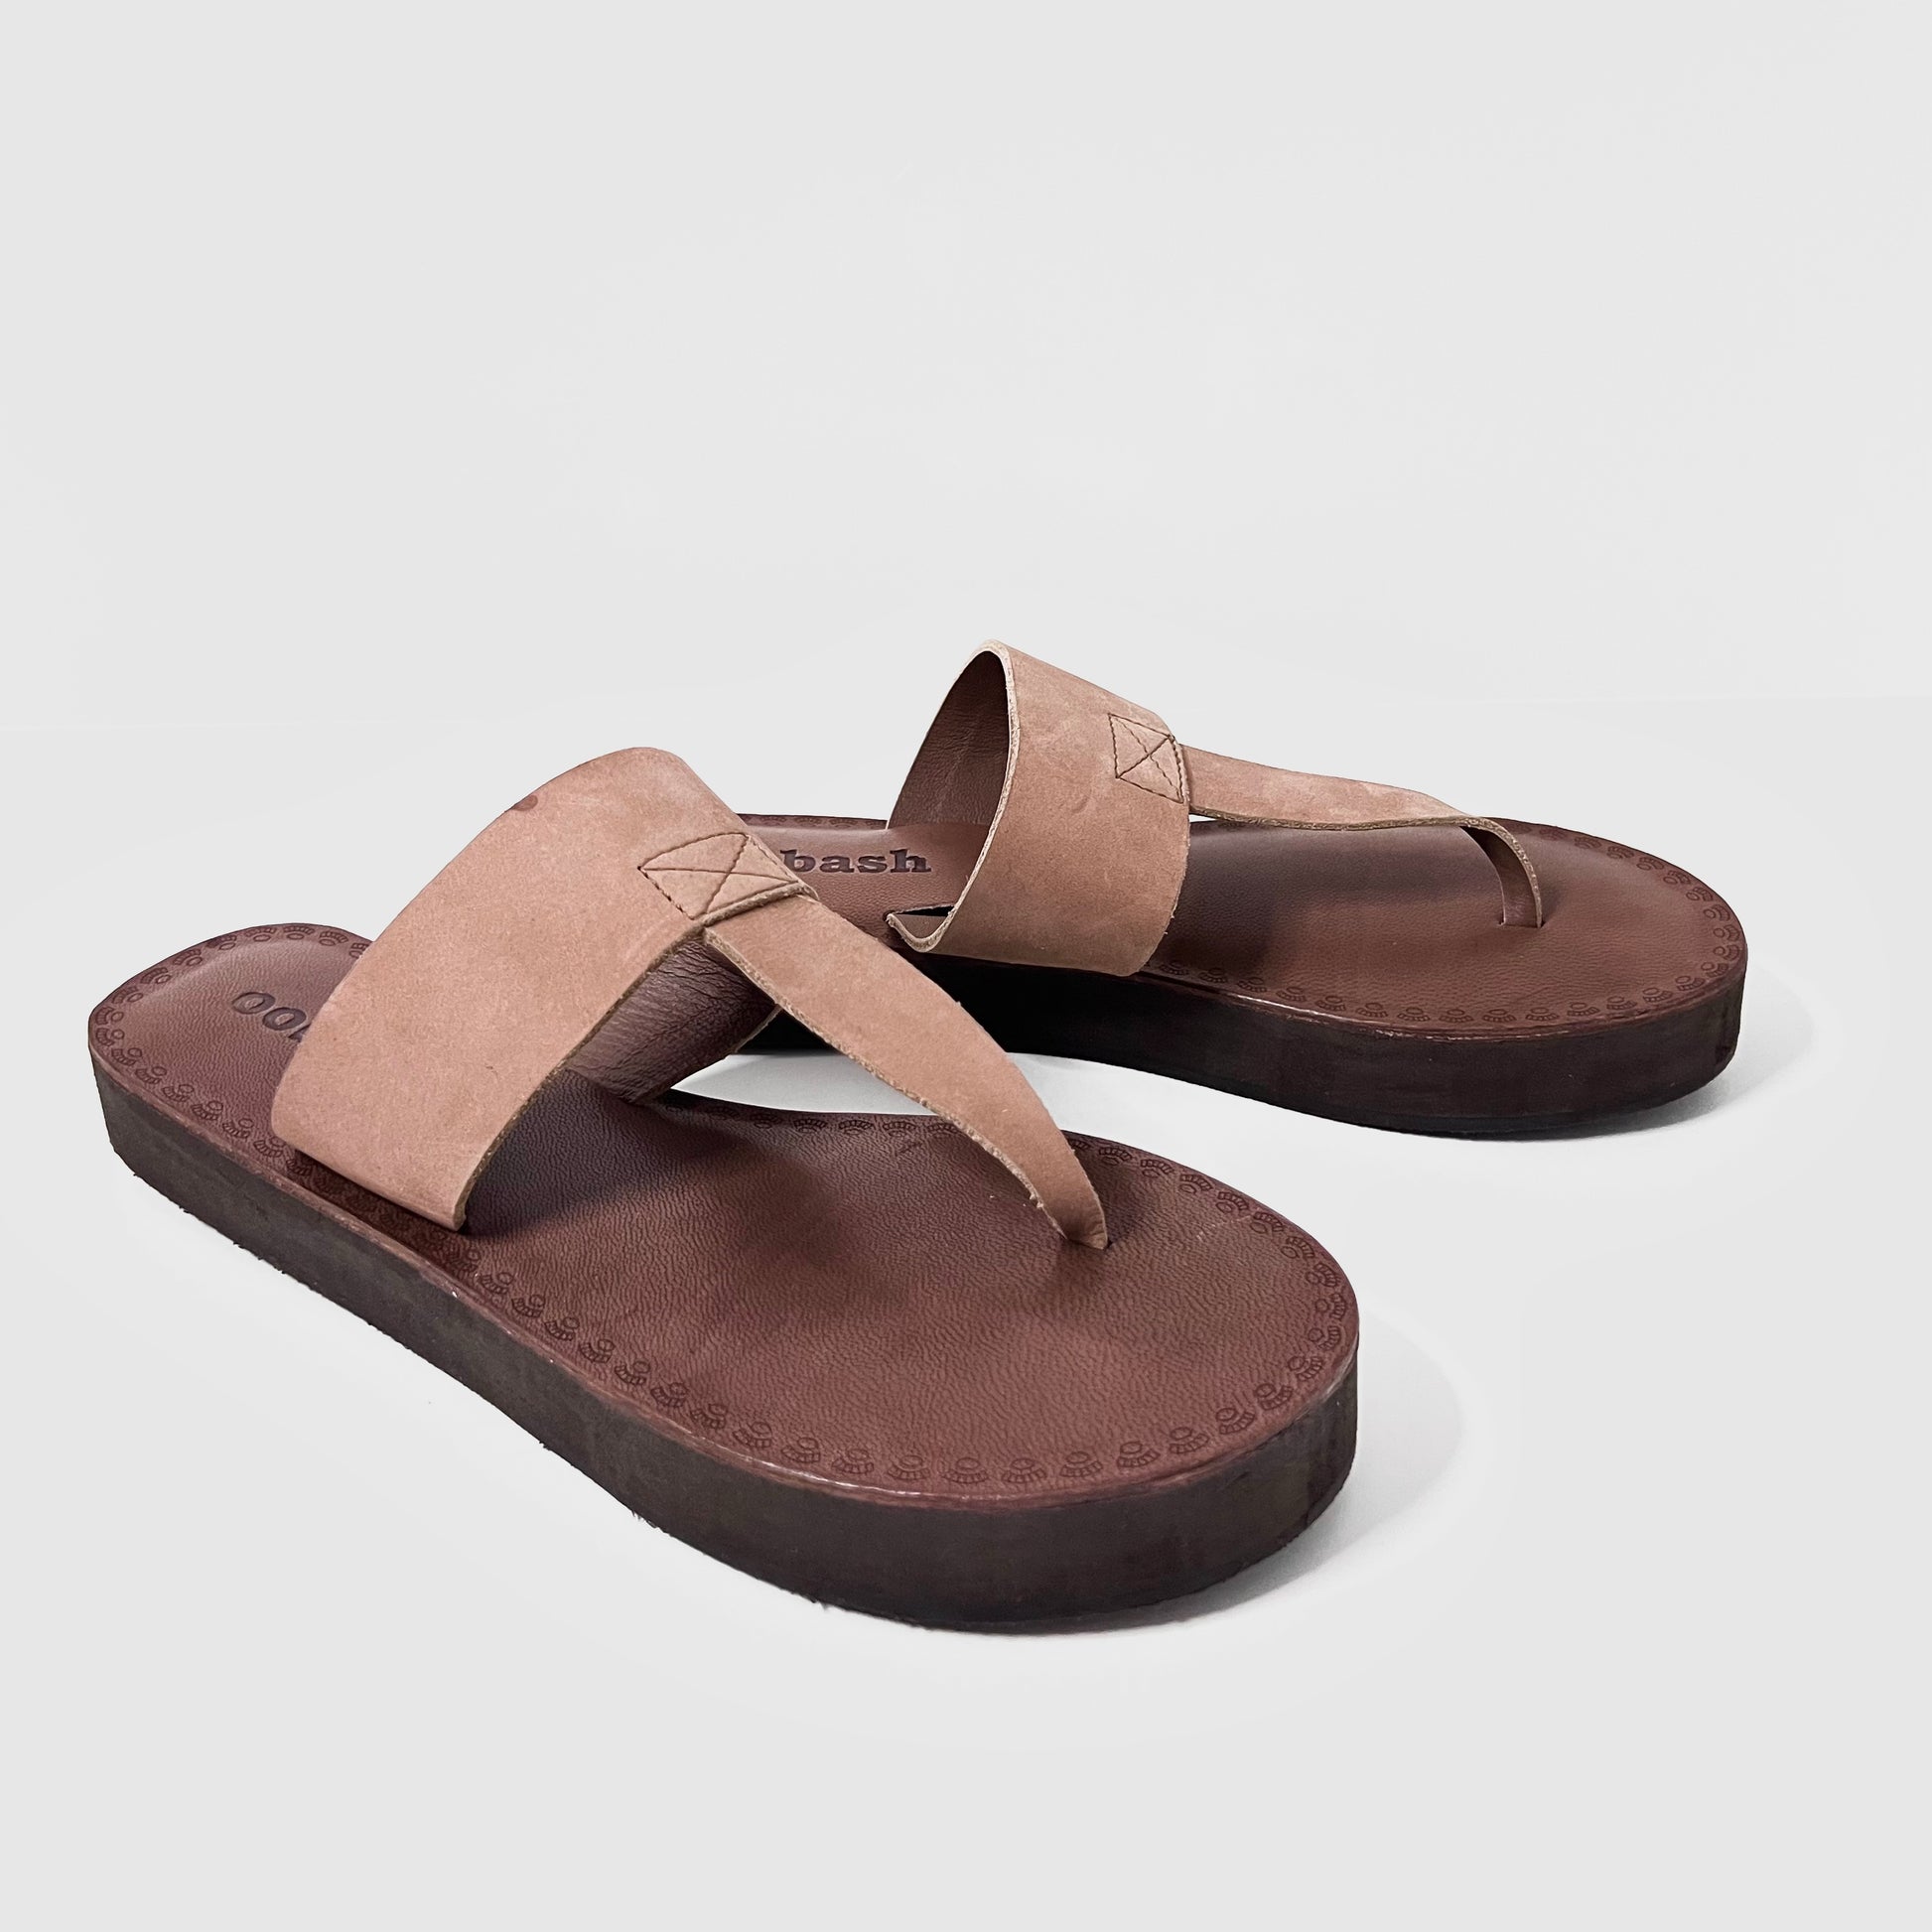 oobash Katherine tan brown leather thong sandal for ladies girl women